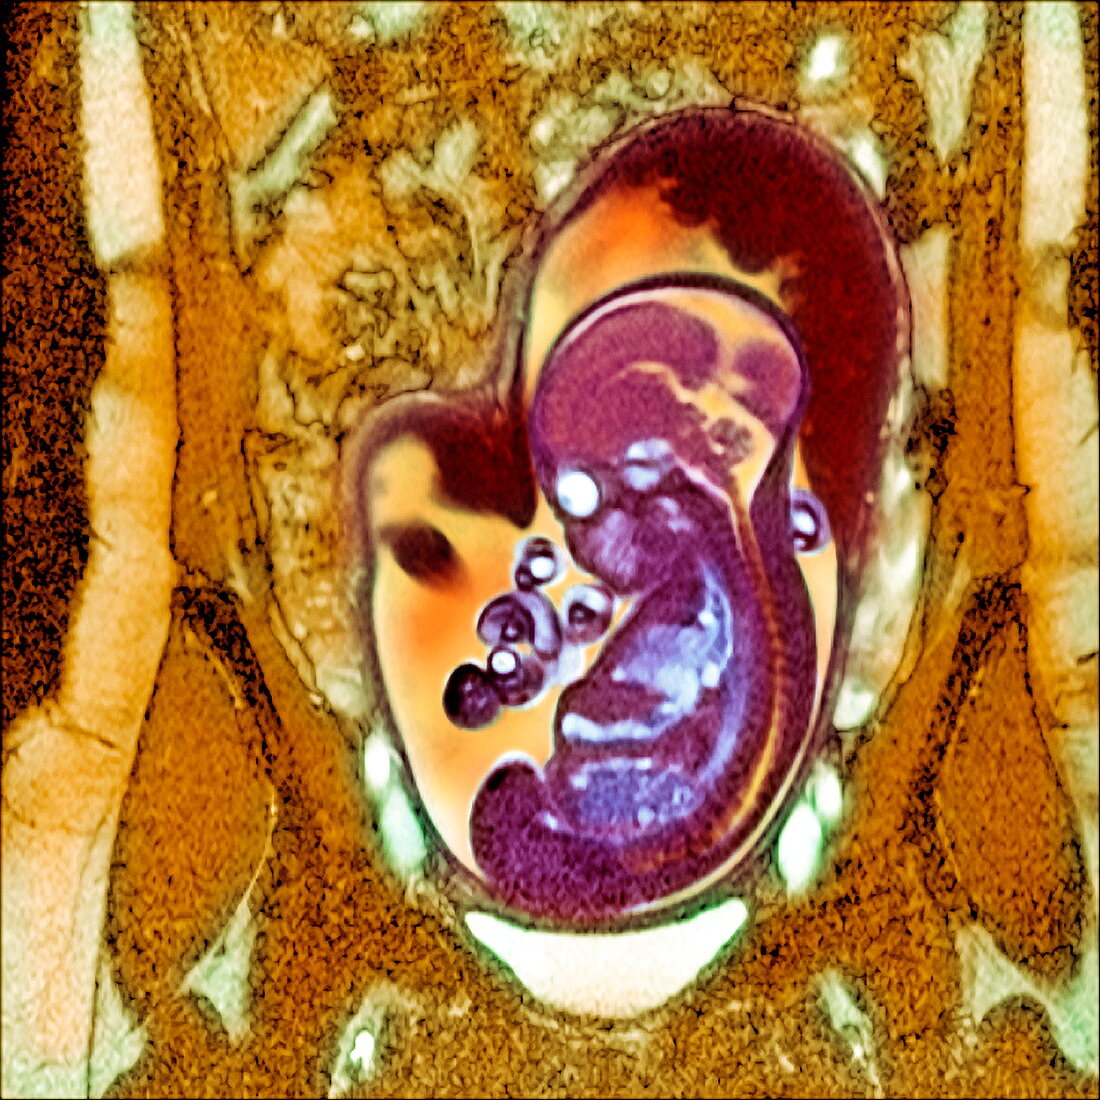 Abnormal foetus